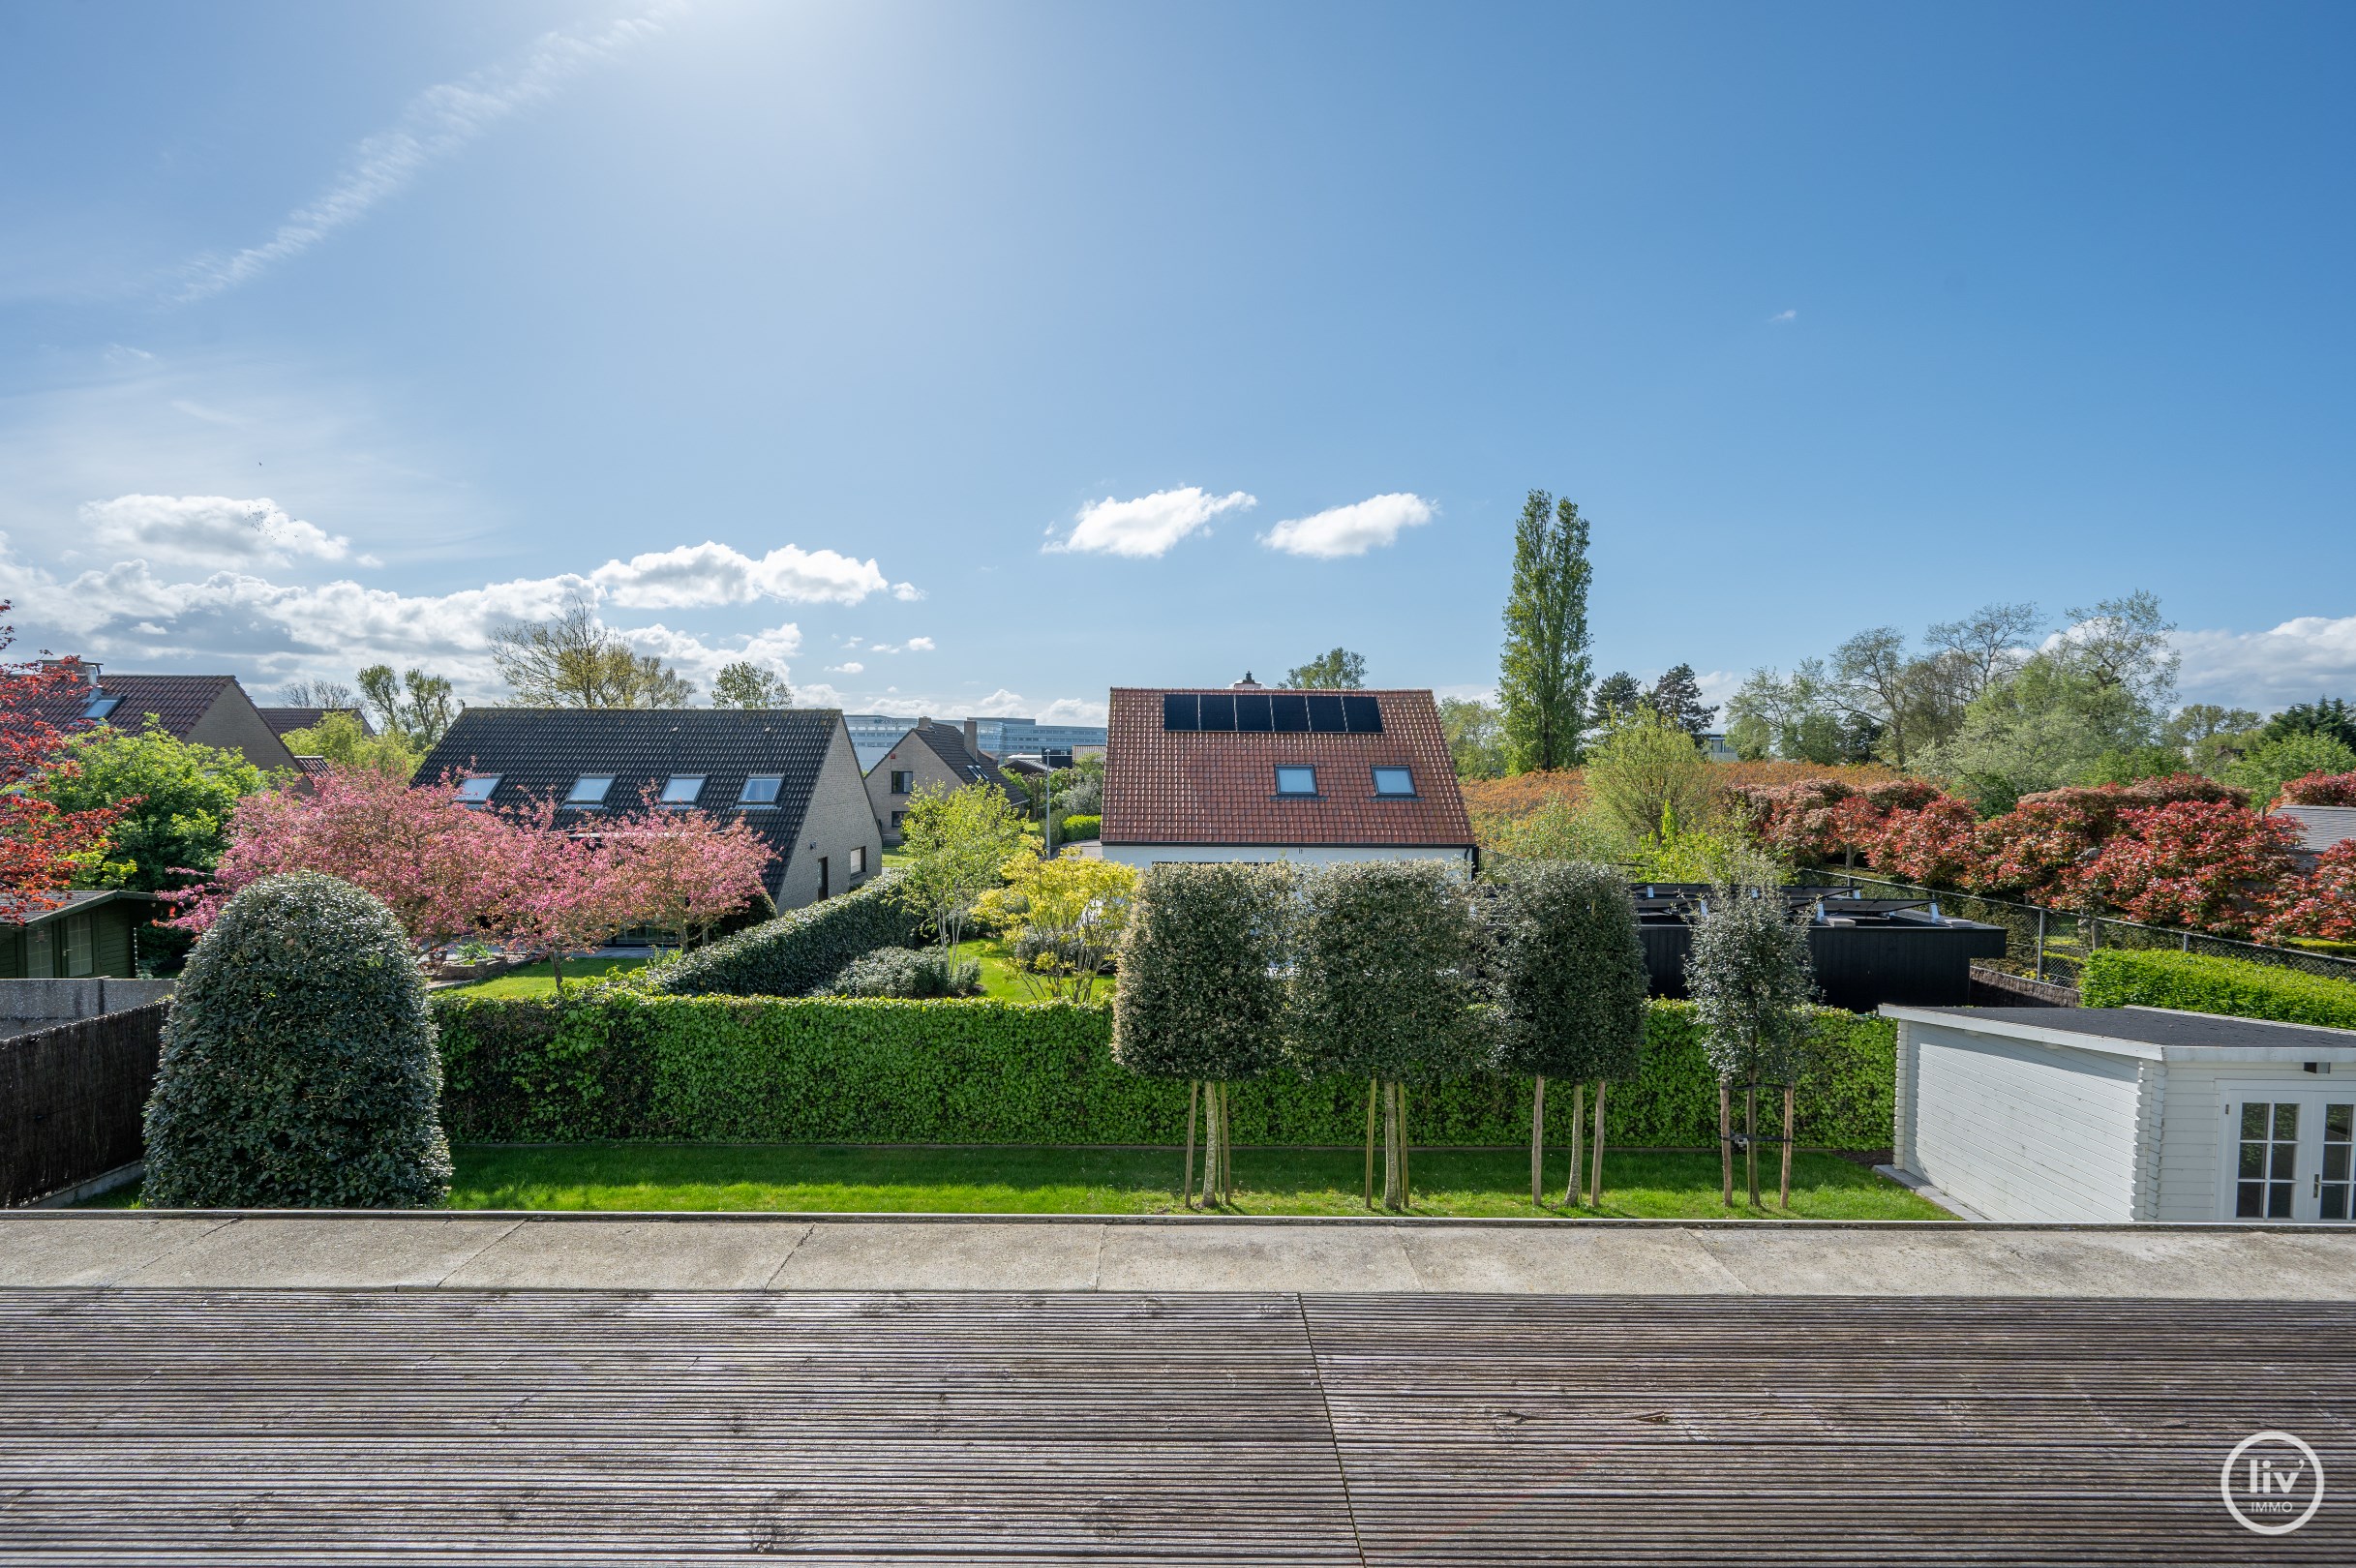 Villa moderne (2017) situ&#233;e &#224; proximit&#233; du centre de Knokke. 